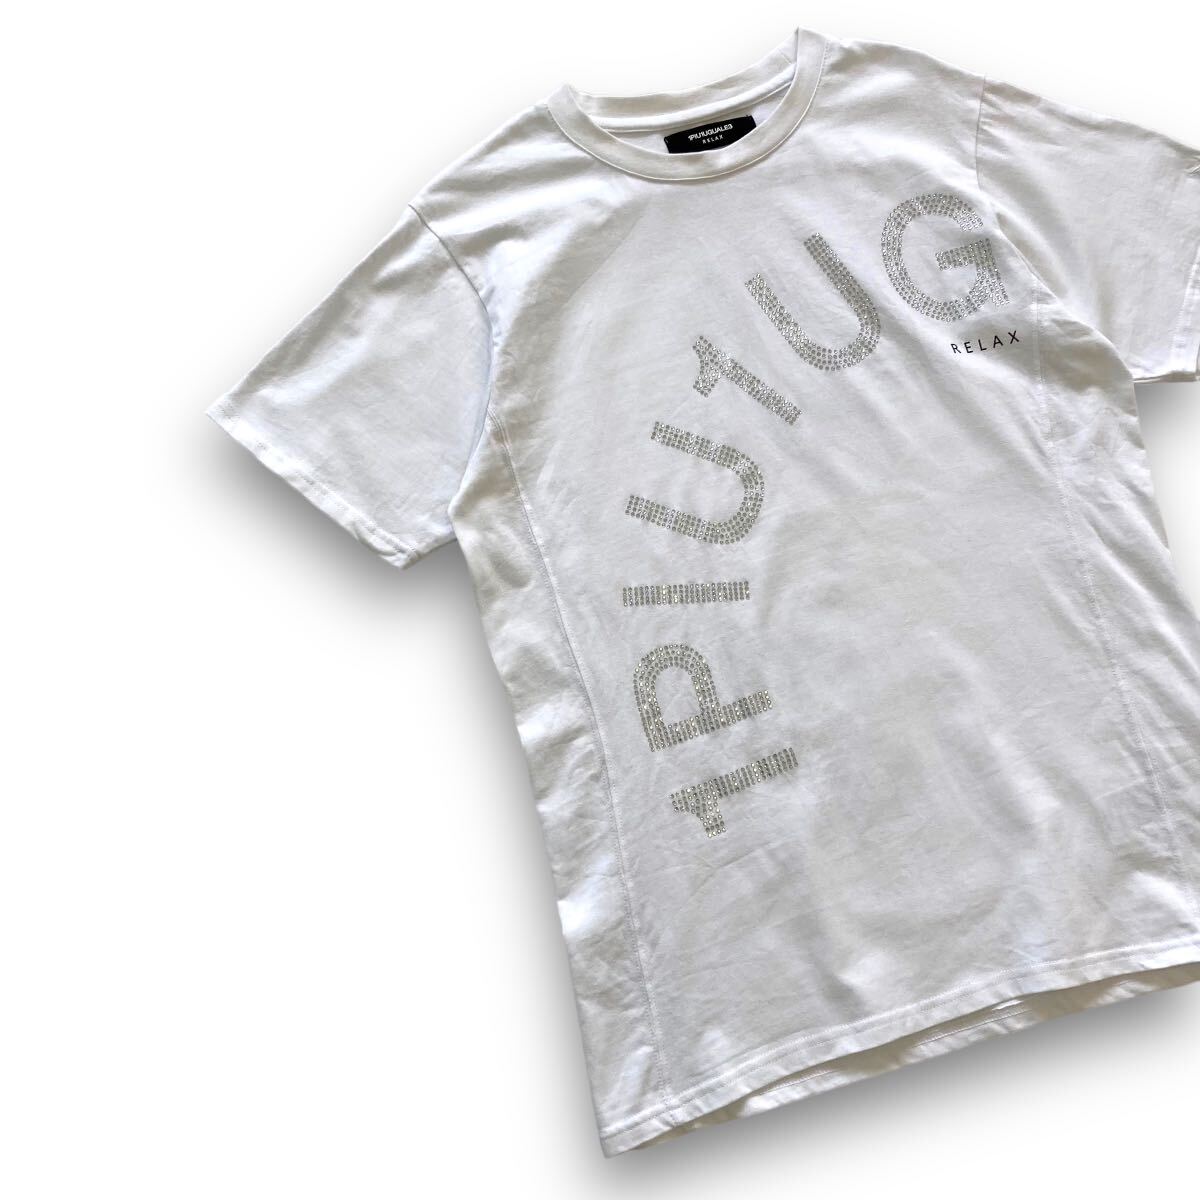 【1PIU1UGUALE3 RELAX】ウノピュウノウグァーレトレリラックス ストーンロゴ 半袖Tシャツ tシャツ ワンポイント刺繍ロゴ 白 ホワイト (L)